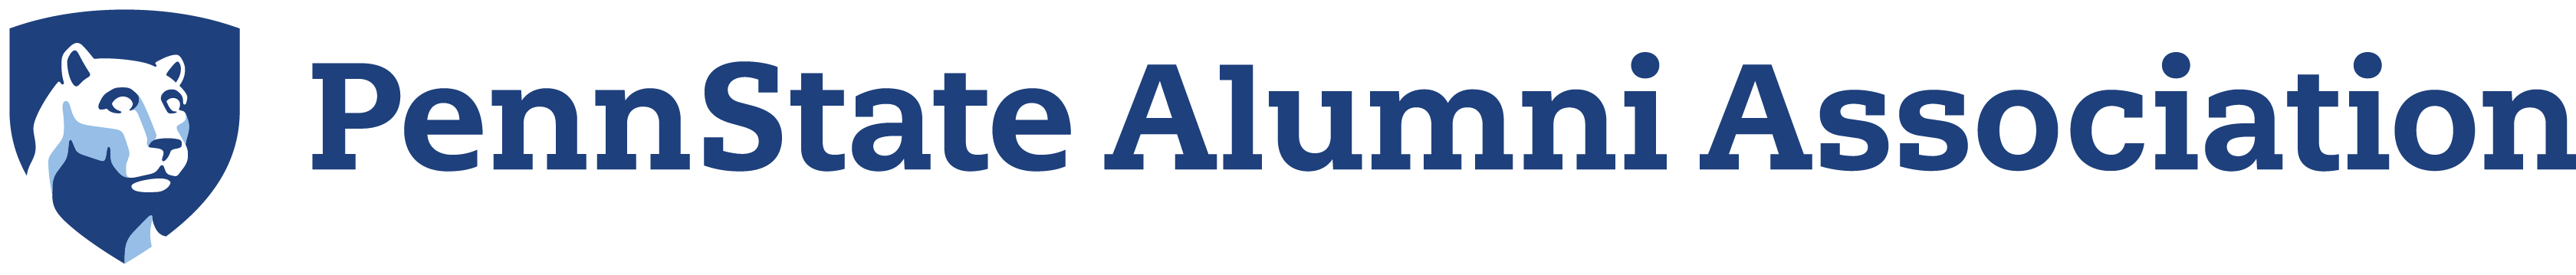 Penn State Alumni Association horizontal logo